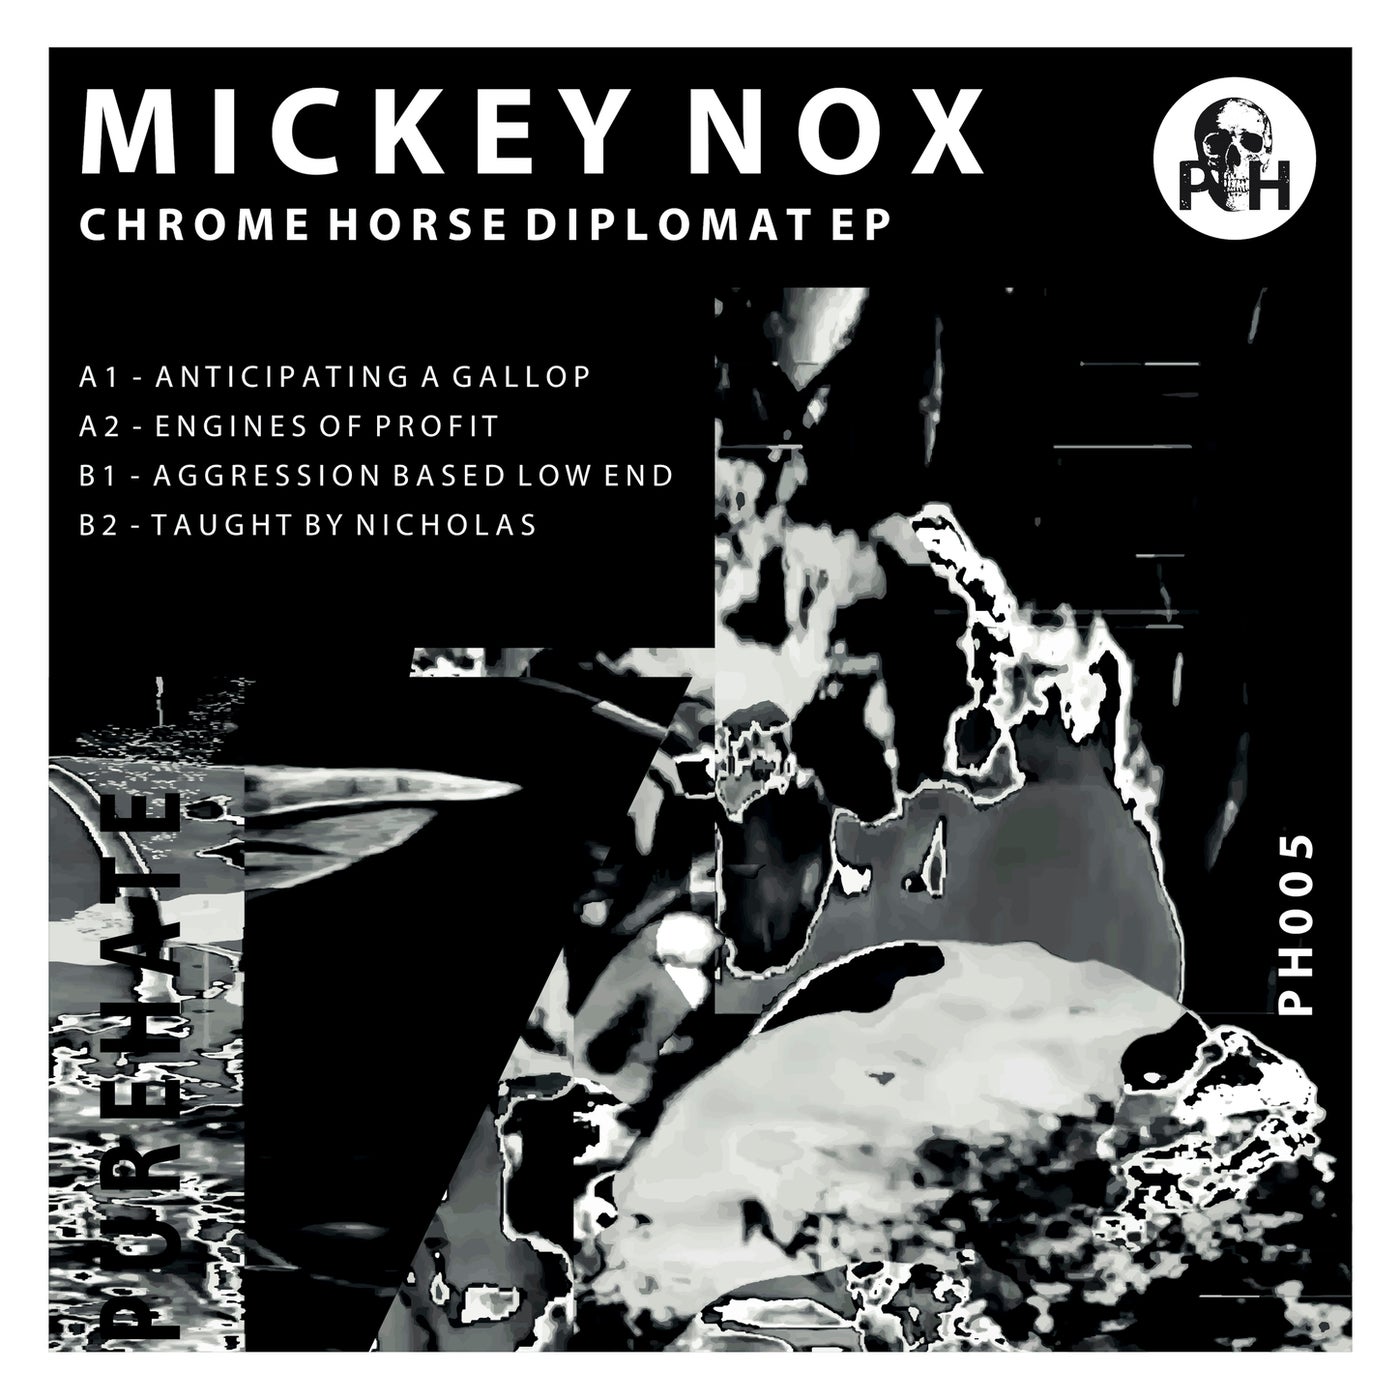 Chrome Horse Diplomat EP